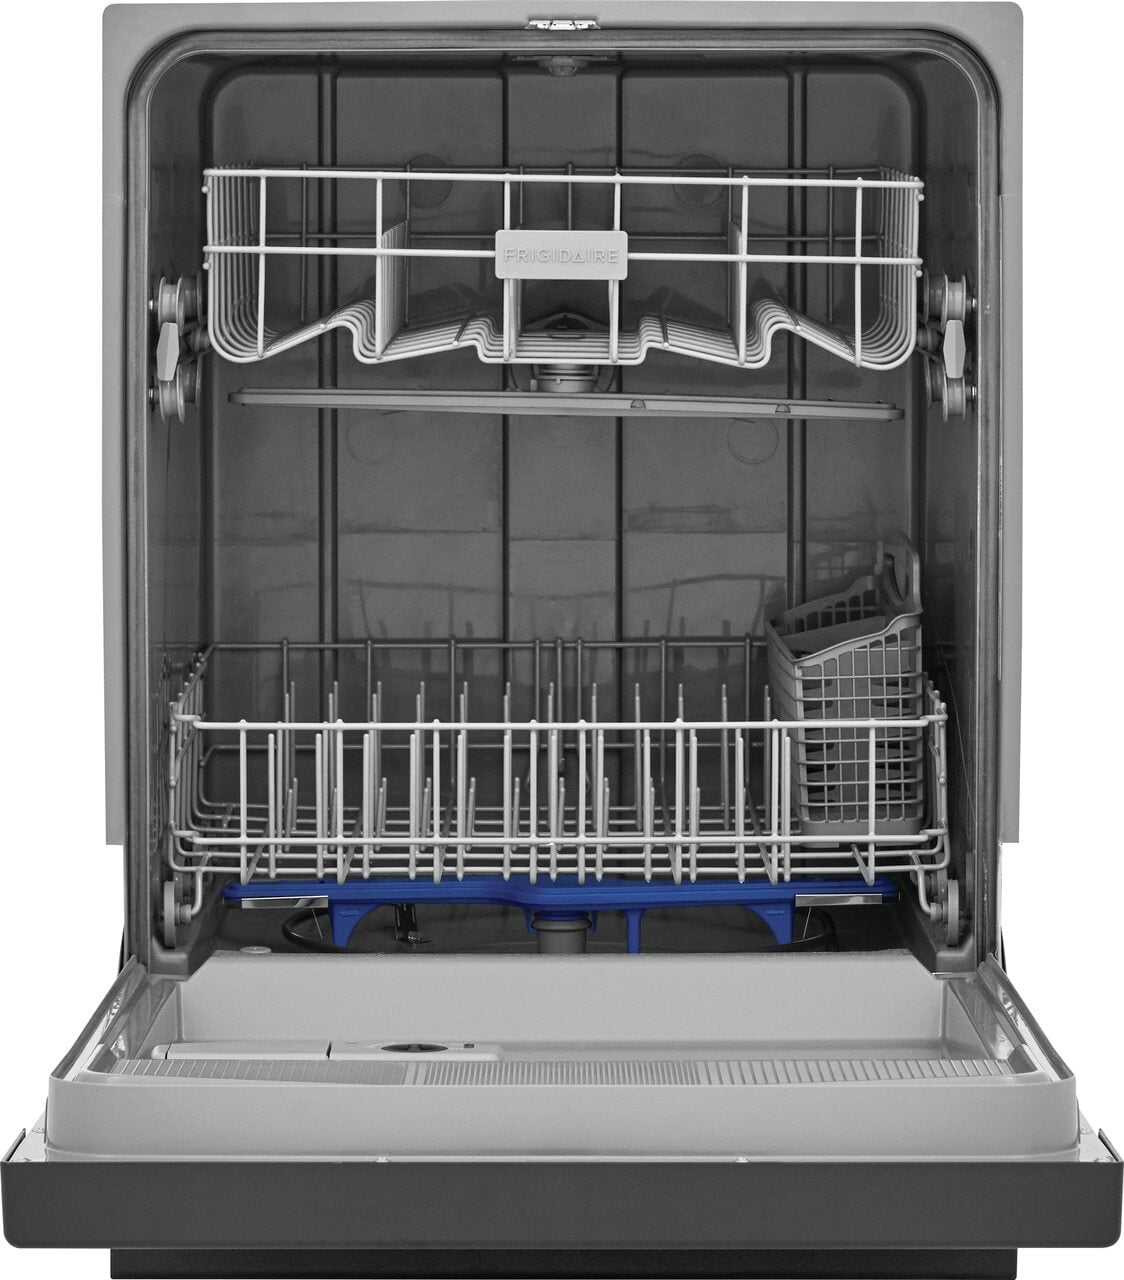 Frigidaire FDPC4221AS Frigidaire 24'' Built-In Dishwasher